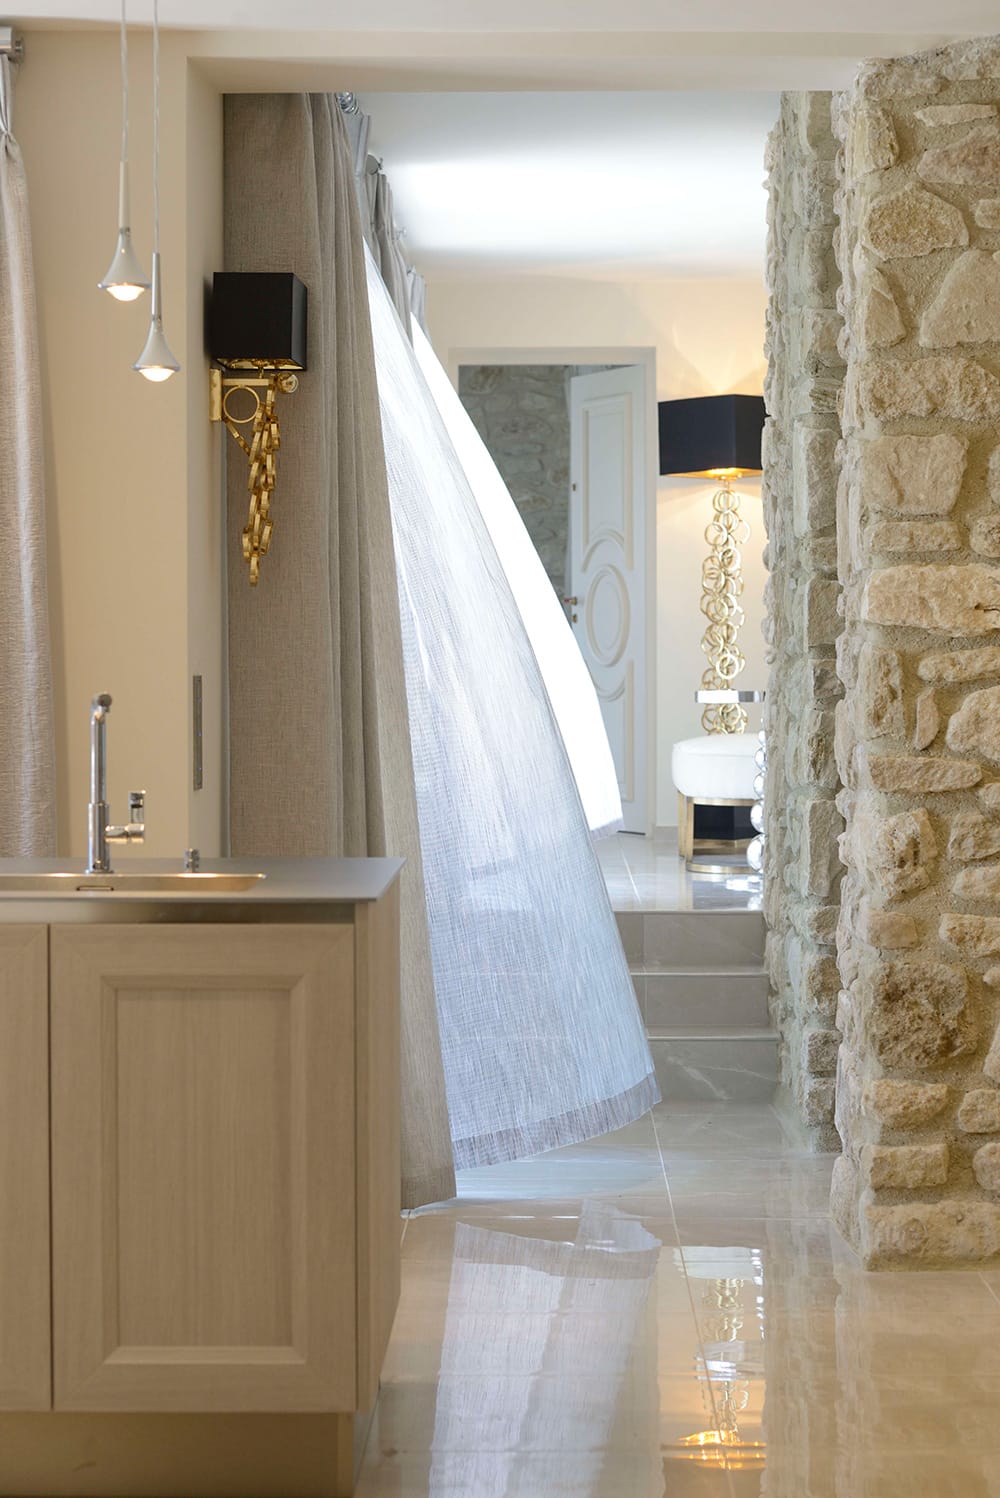 Award winning Provence villa, corridor with stone walls, gloss floor tiles, sheer curtain blowing in the breeze